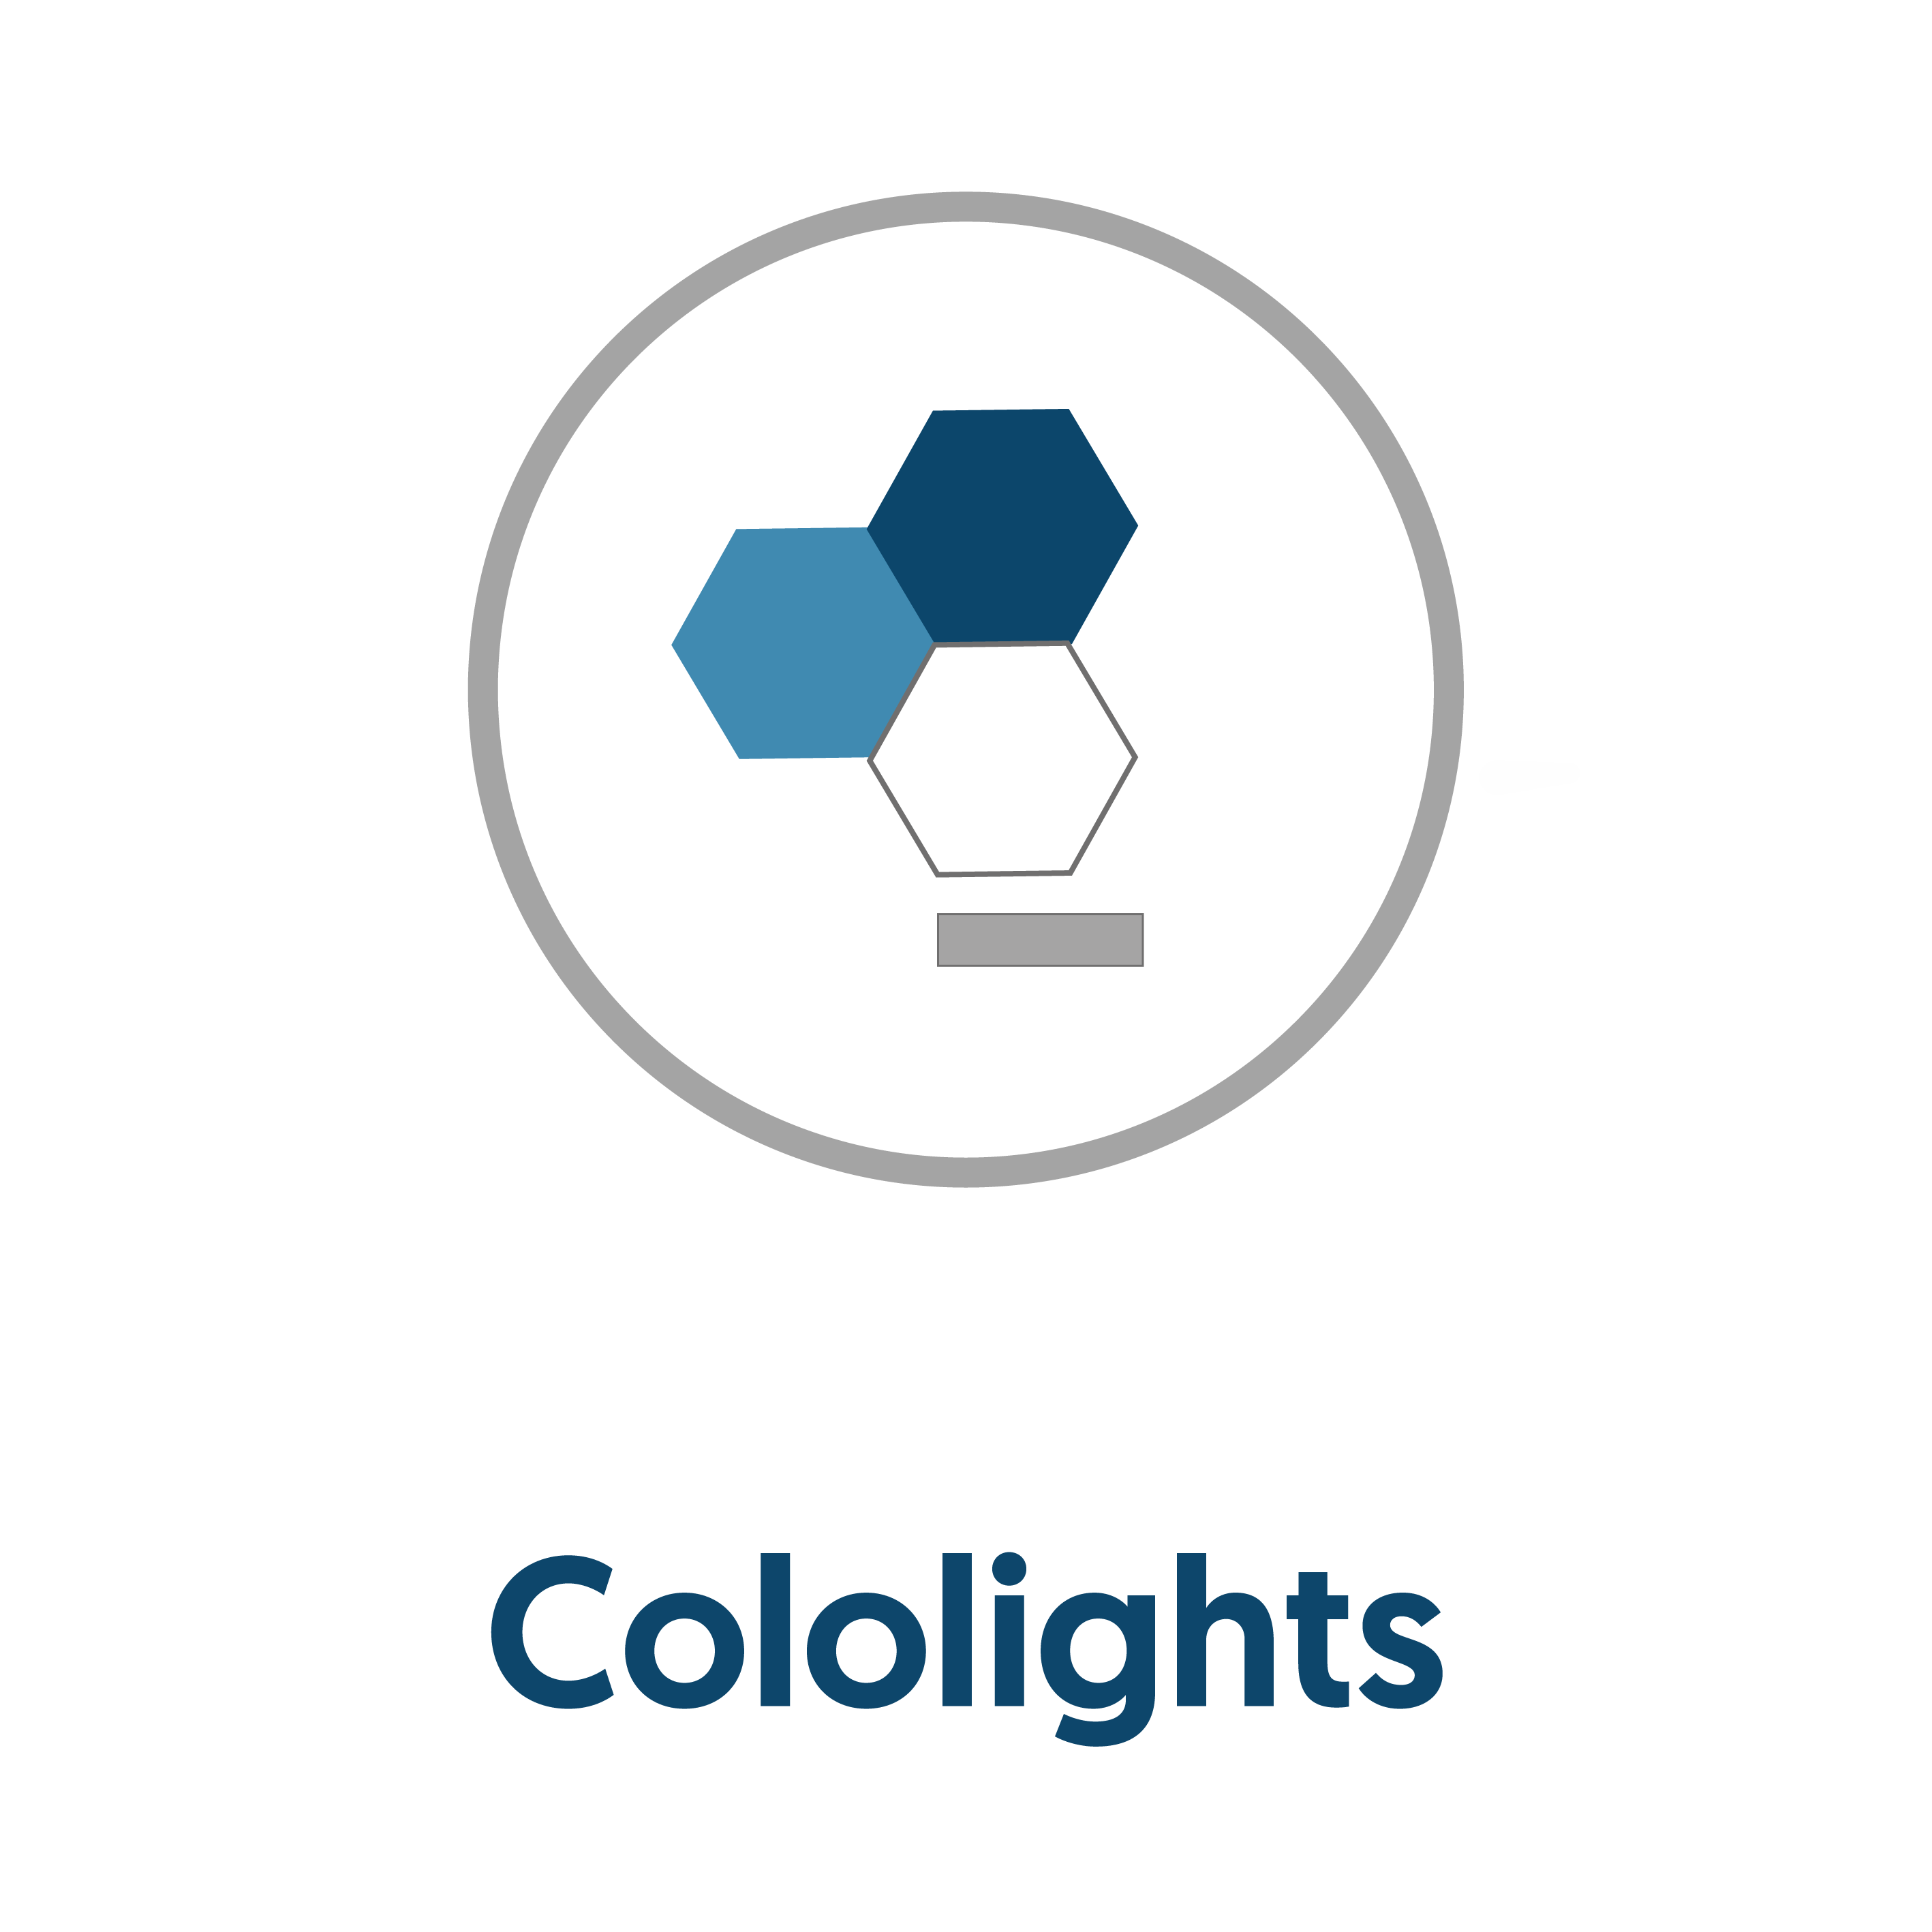 Cololights